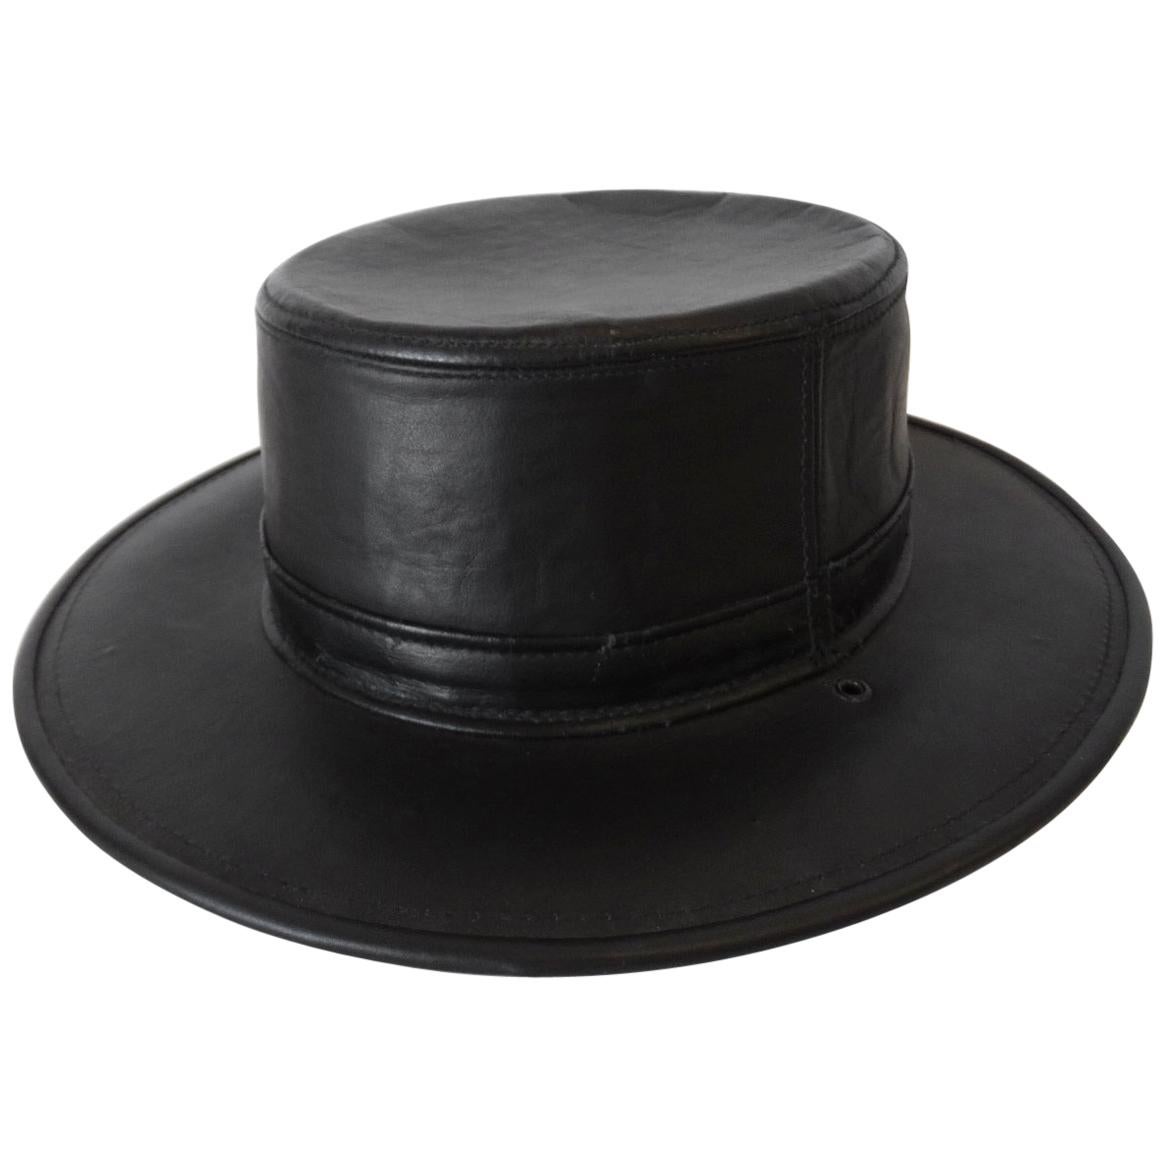 Henschel Black Genuine Leather Wide Brim Boater Hat